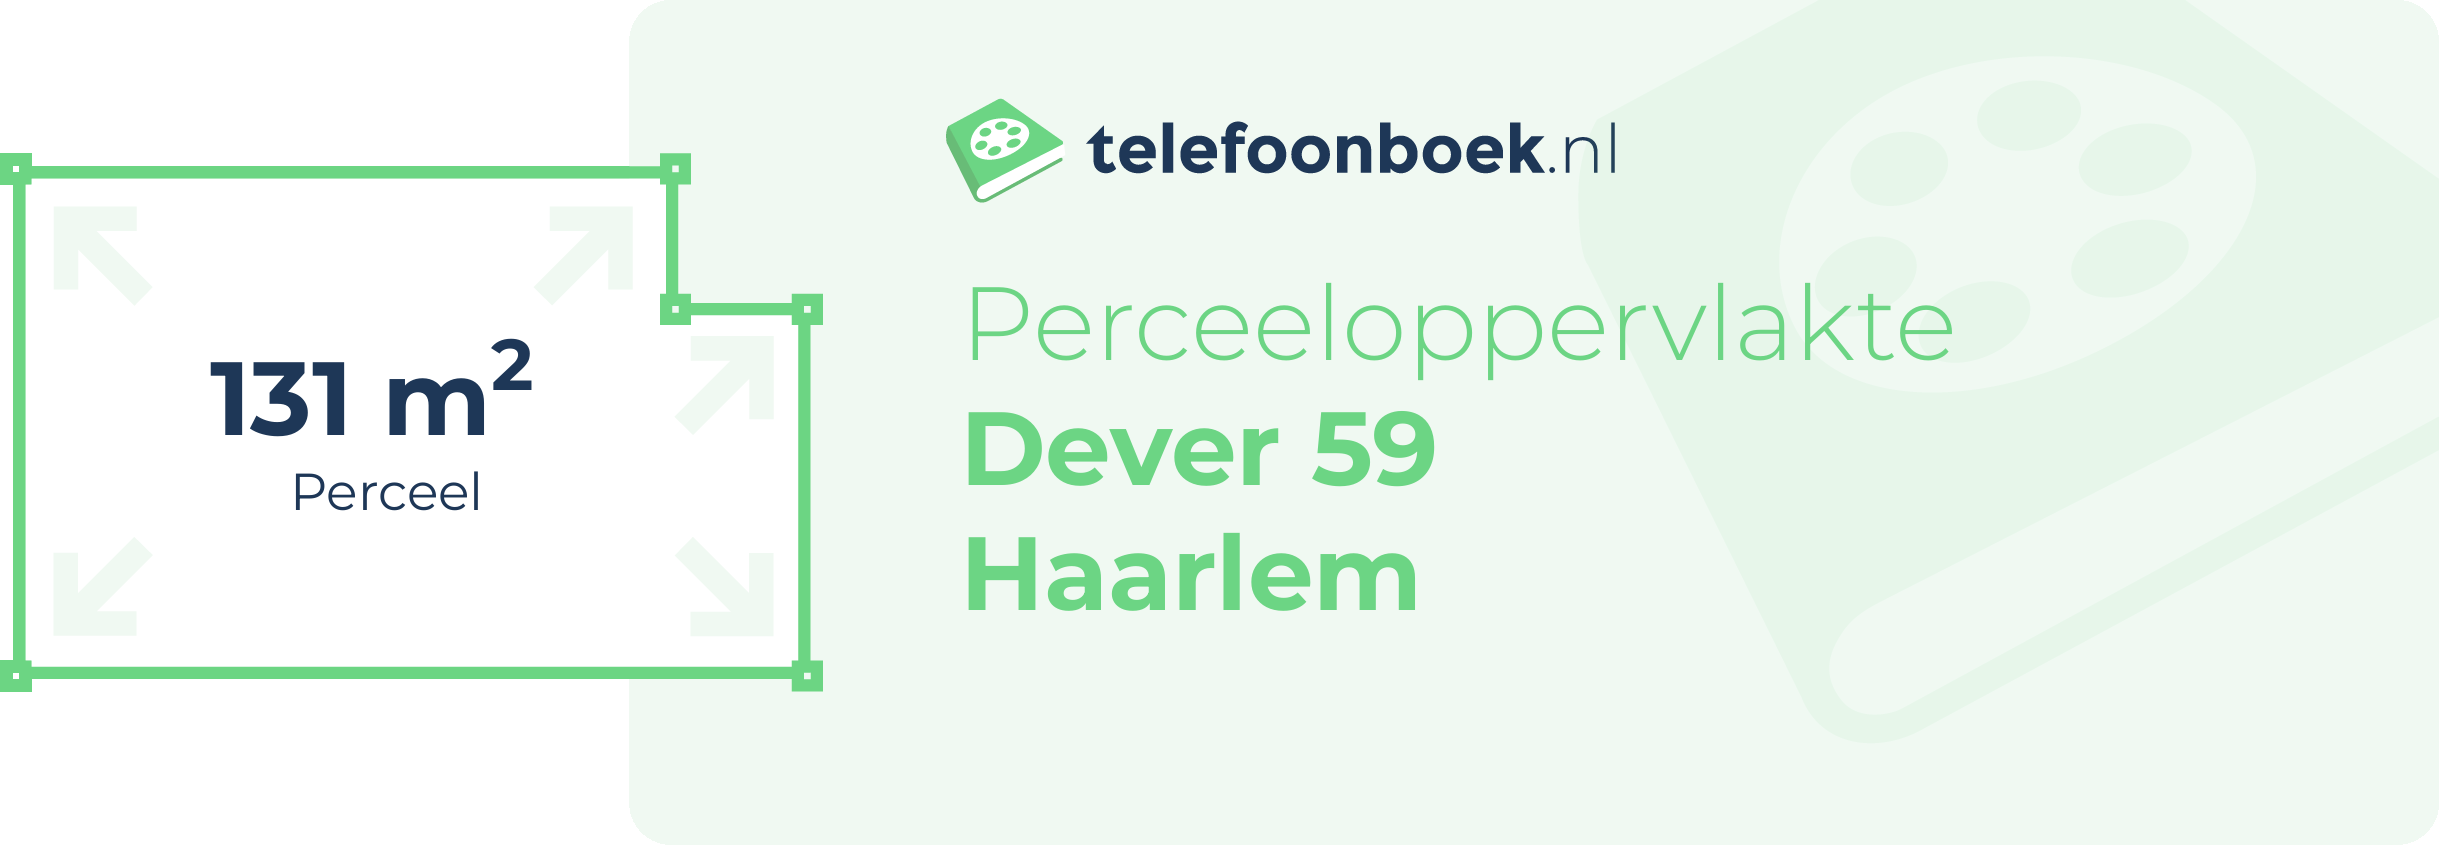 Perceeloppervlakte Dever 59 Haarlem